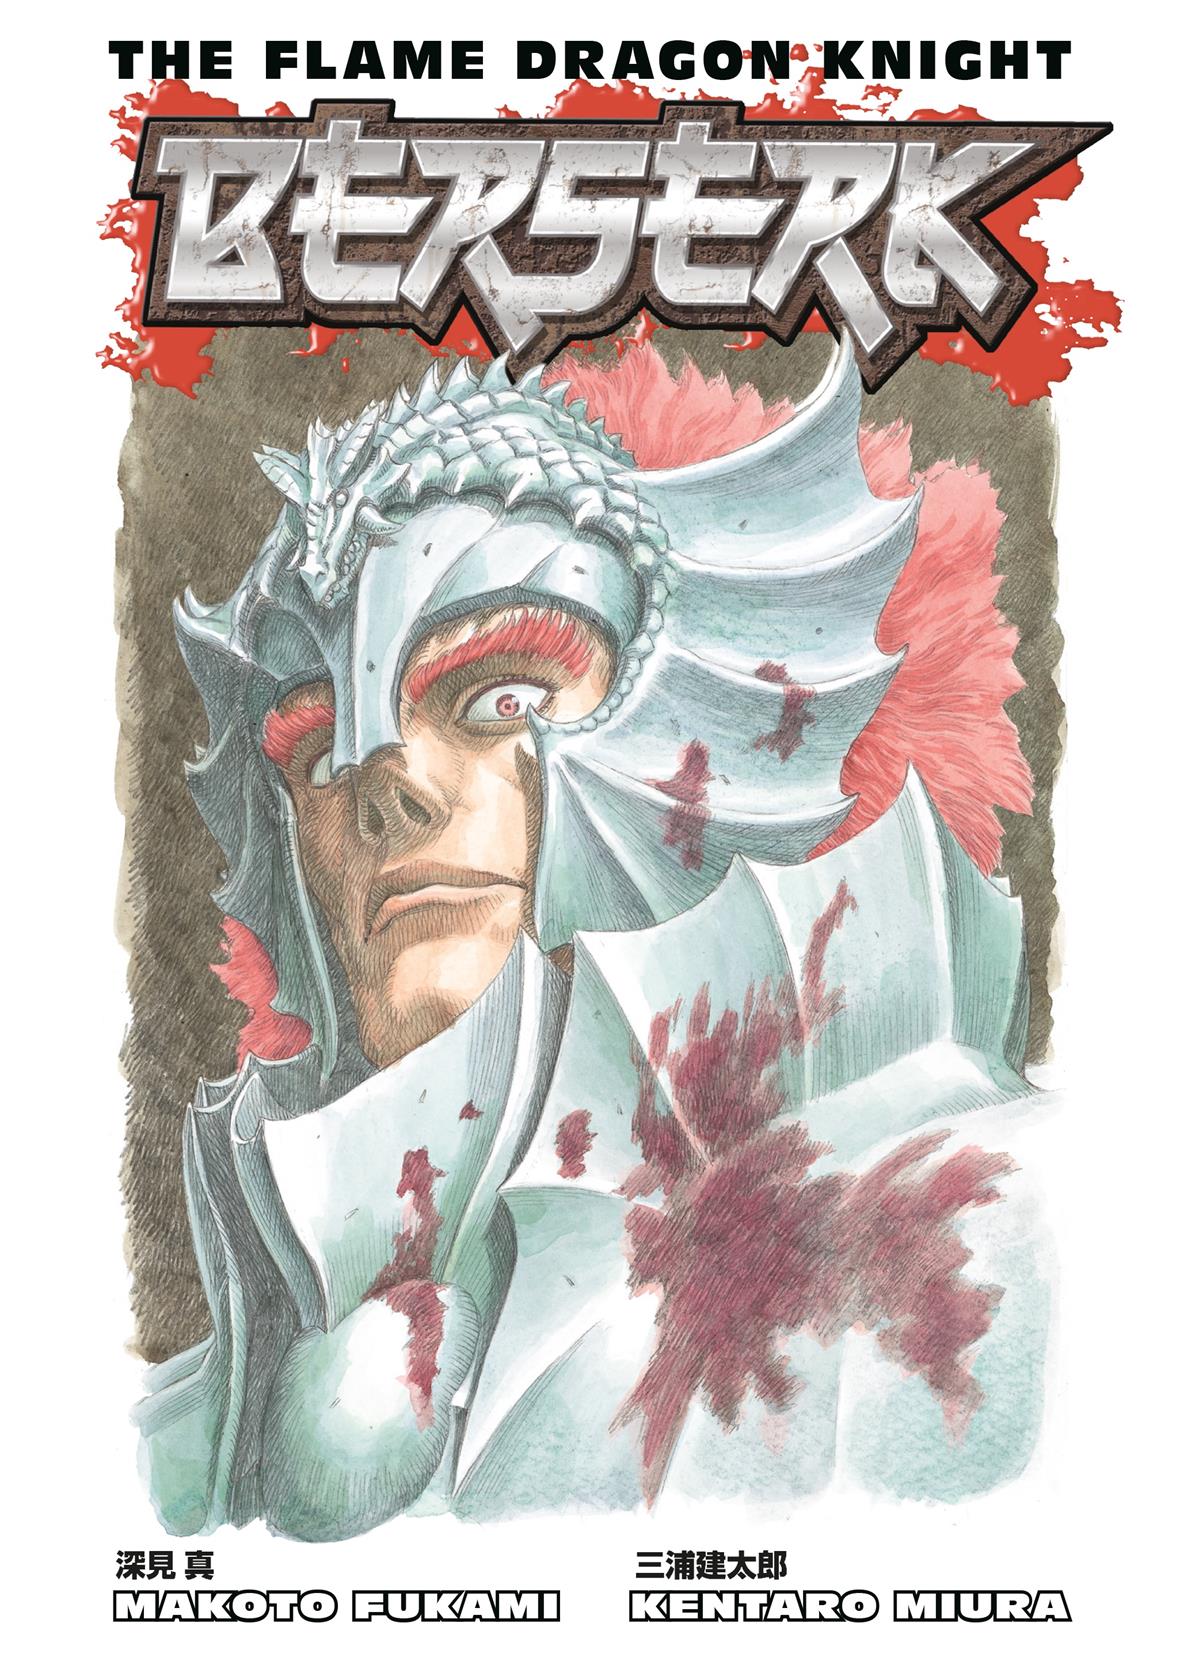 The Behemoth of Manga Berserk to Receive Deluxe Editions at Dark Horse ::  Blog :: Dark Horse Comics